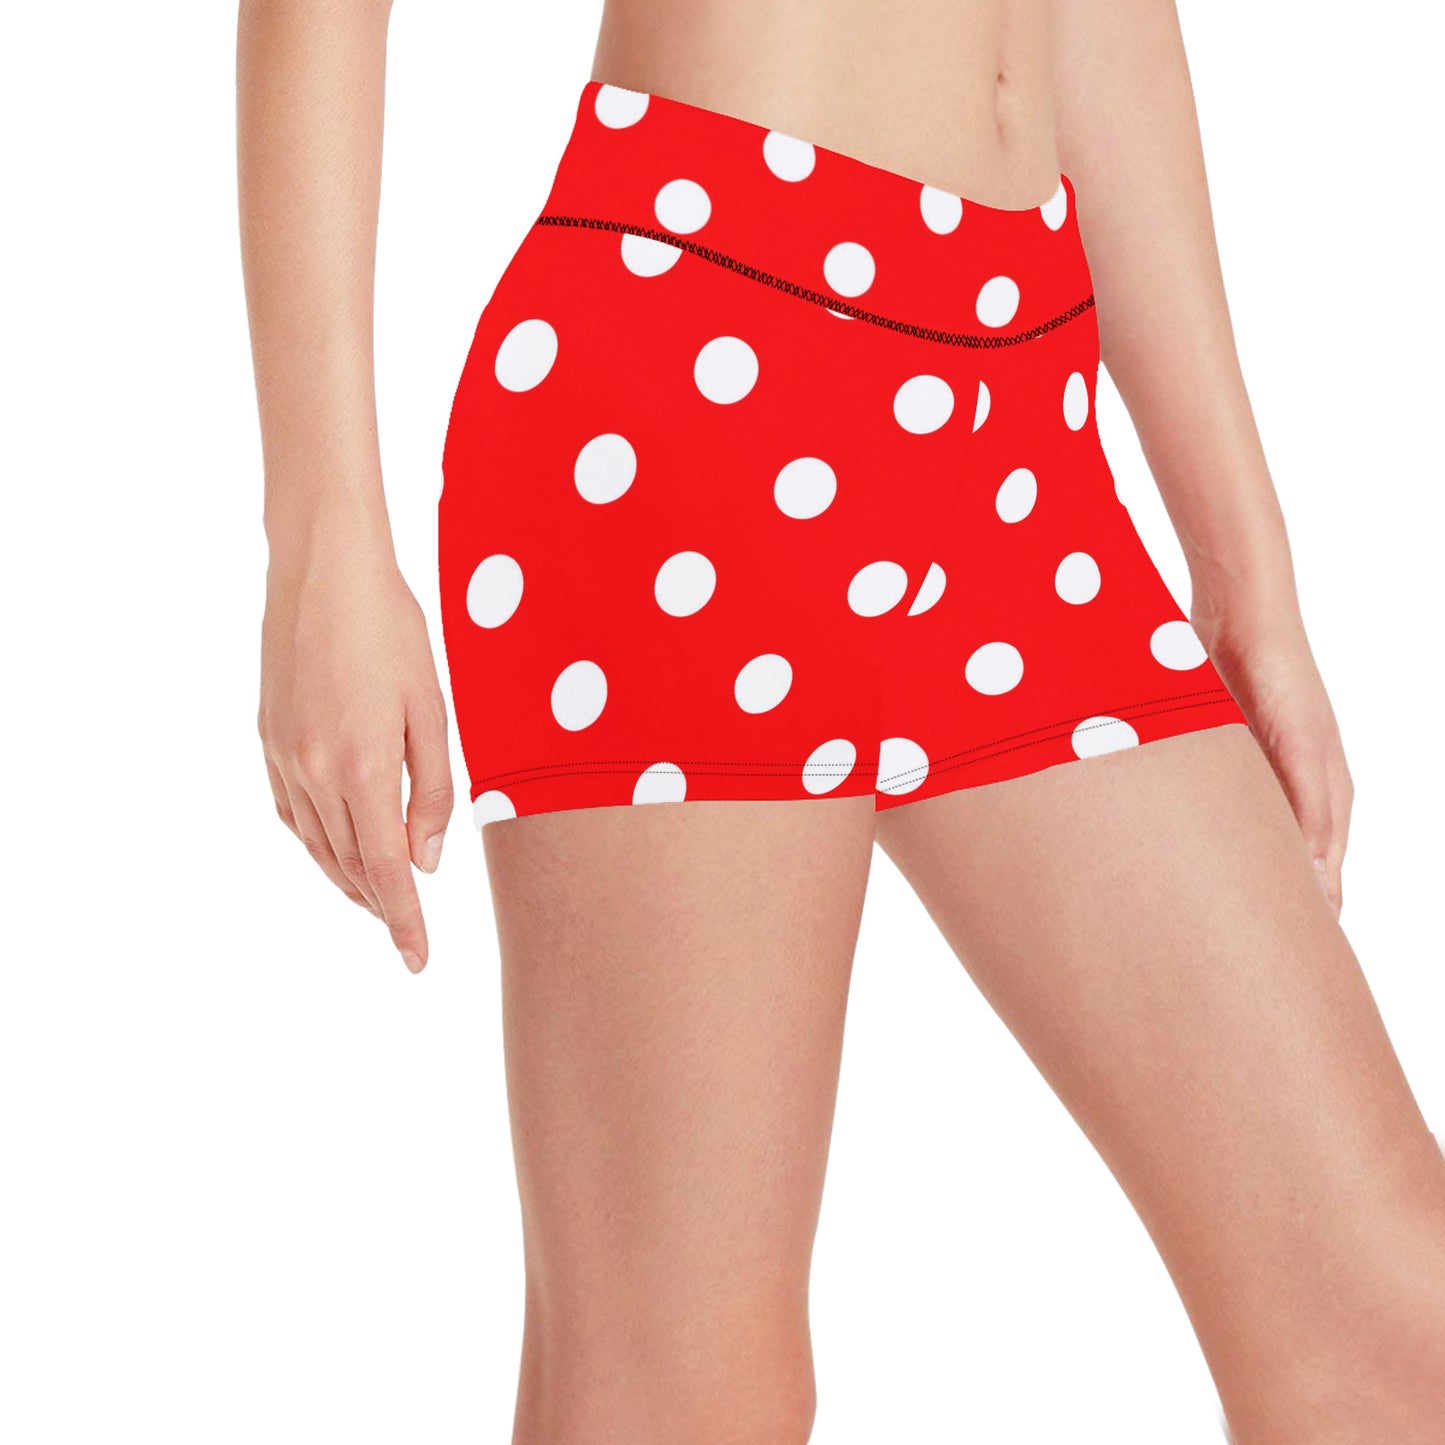 Red With White Polka Dots Women's Short Leggings